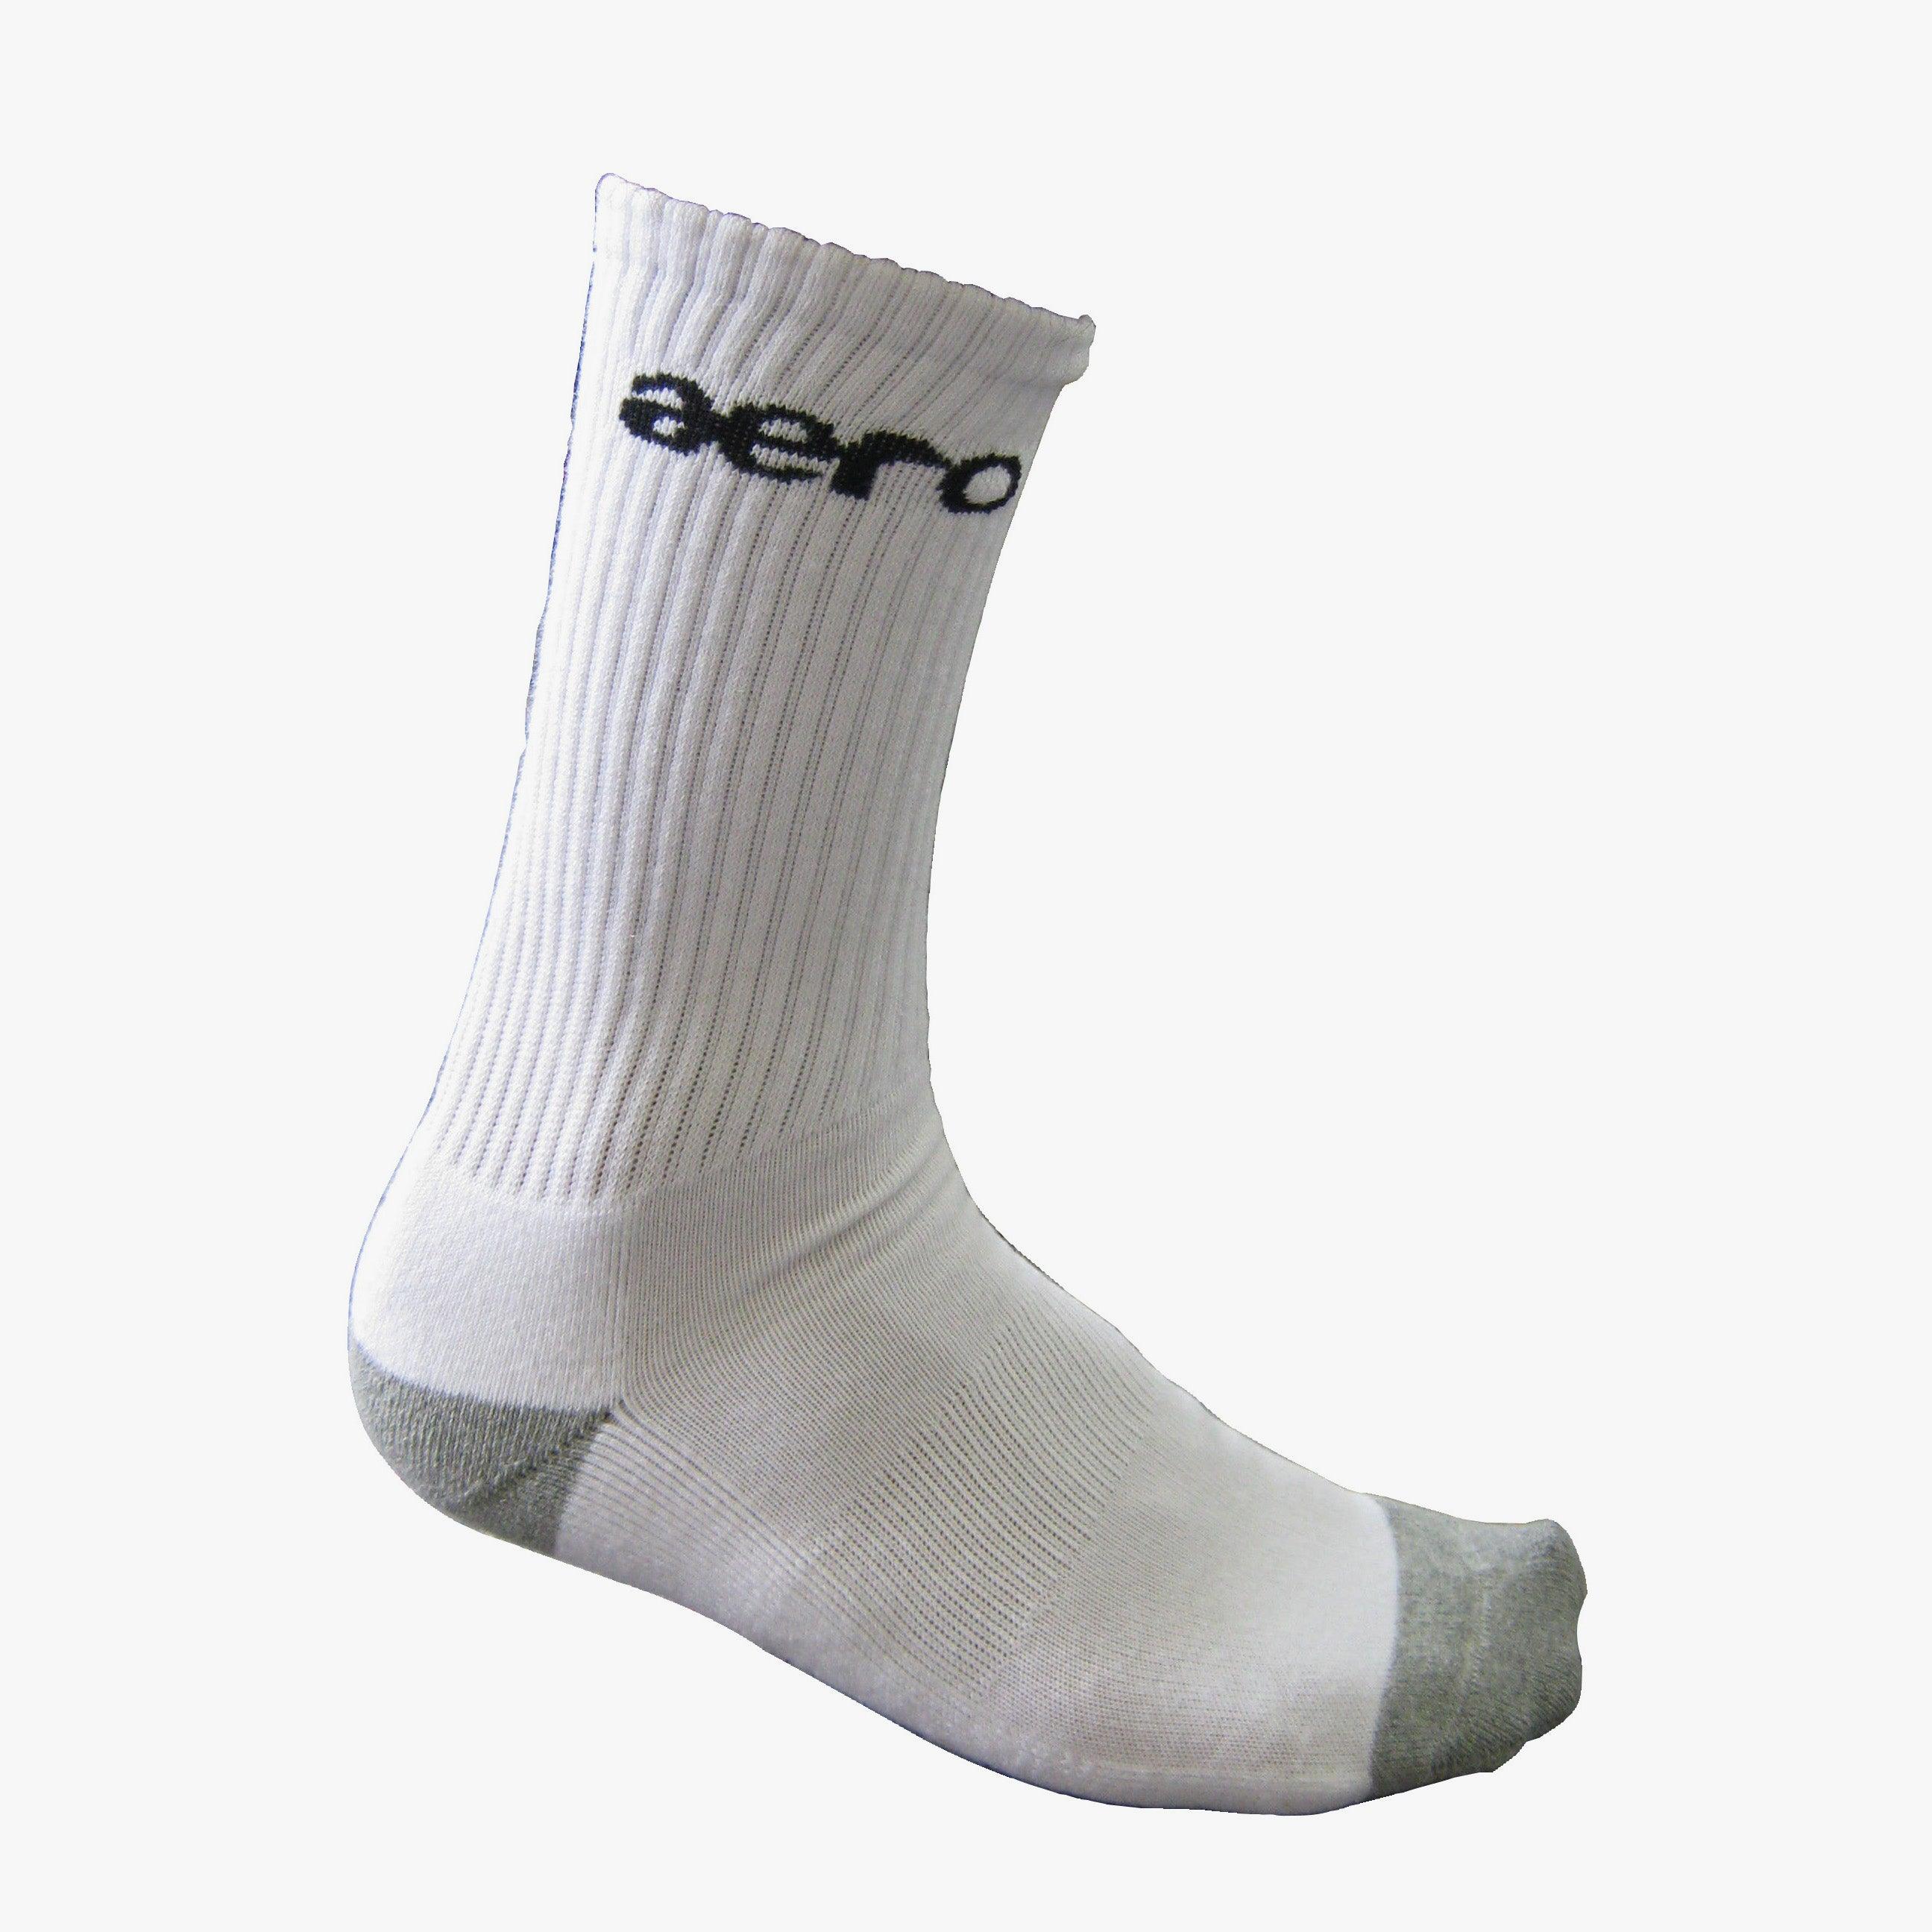 Aero Cricket Socks - 3 Pack - AT Sports